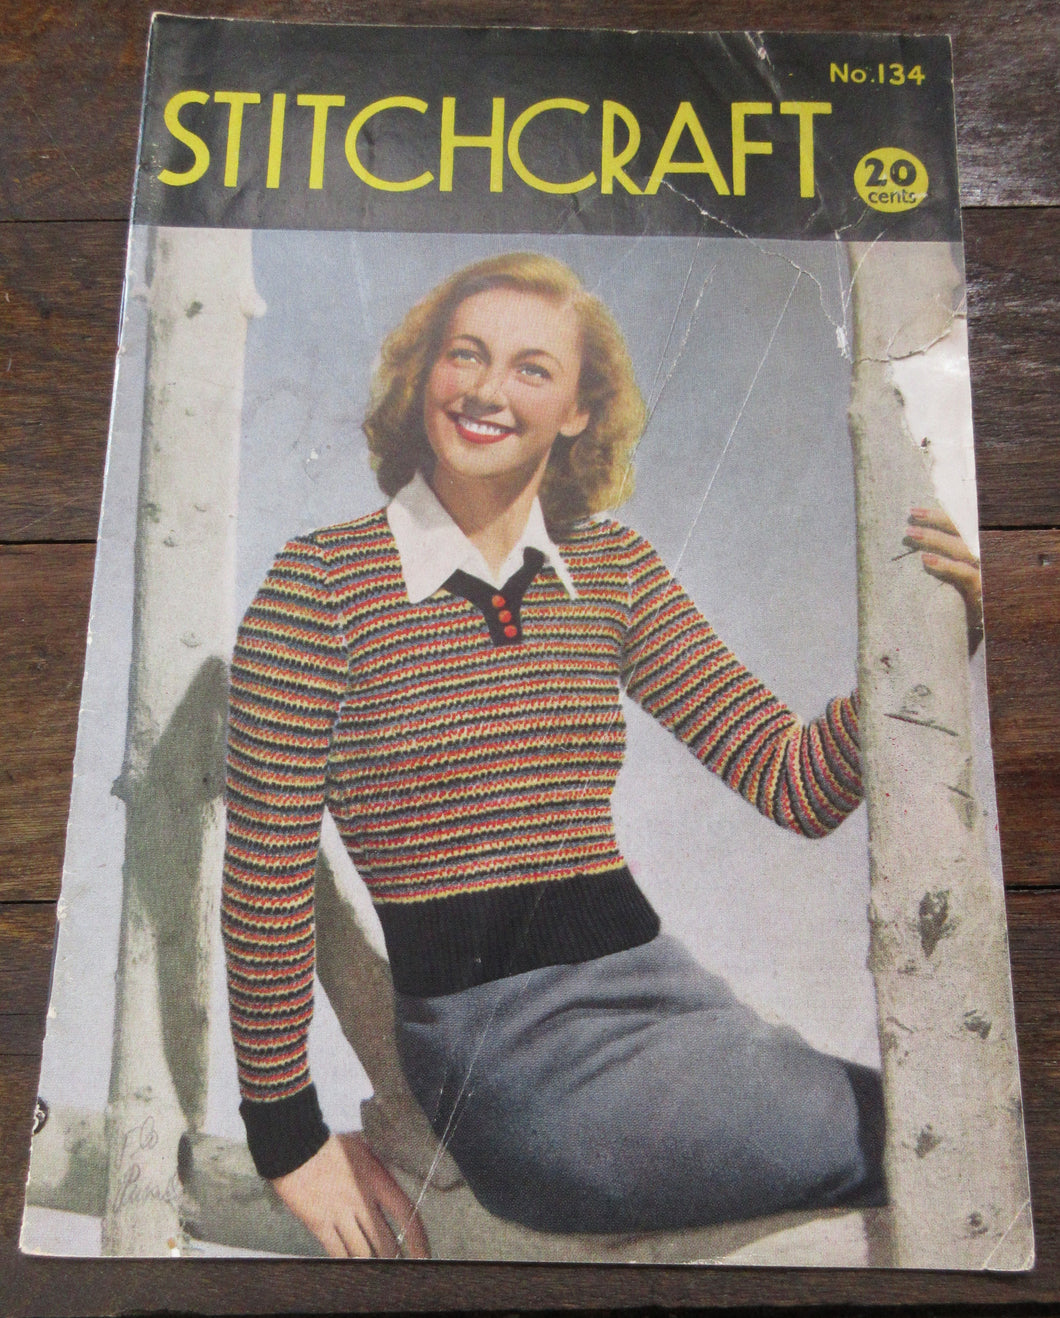 STITCHCRAFT magazine No. 134